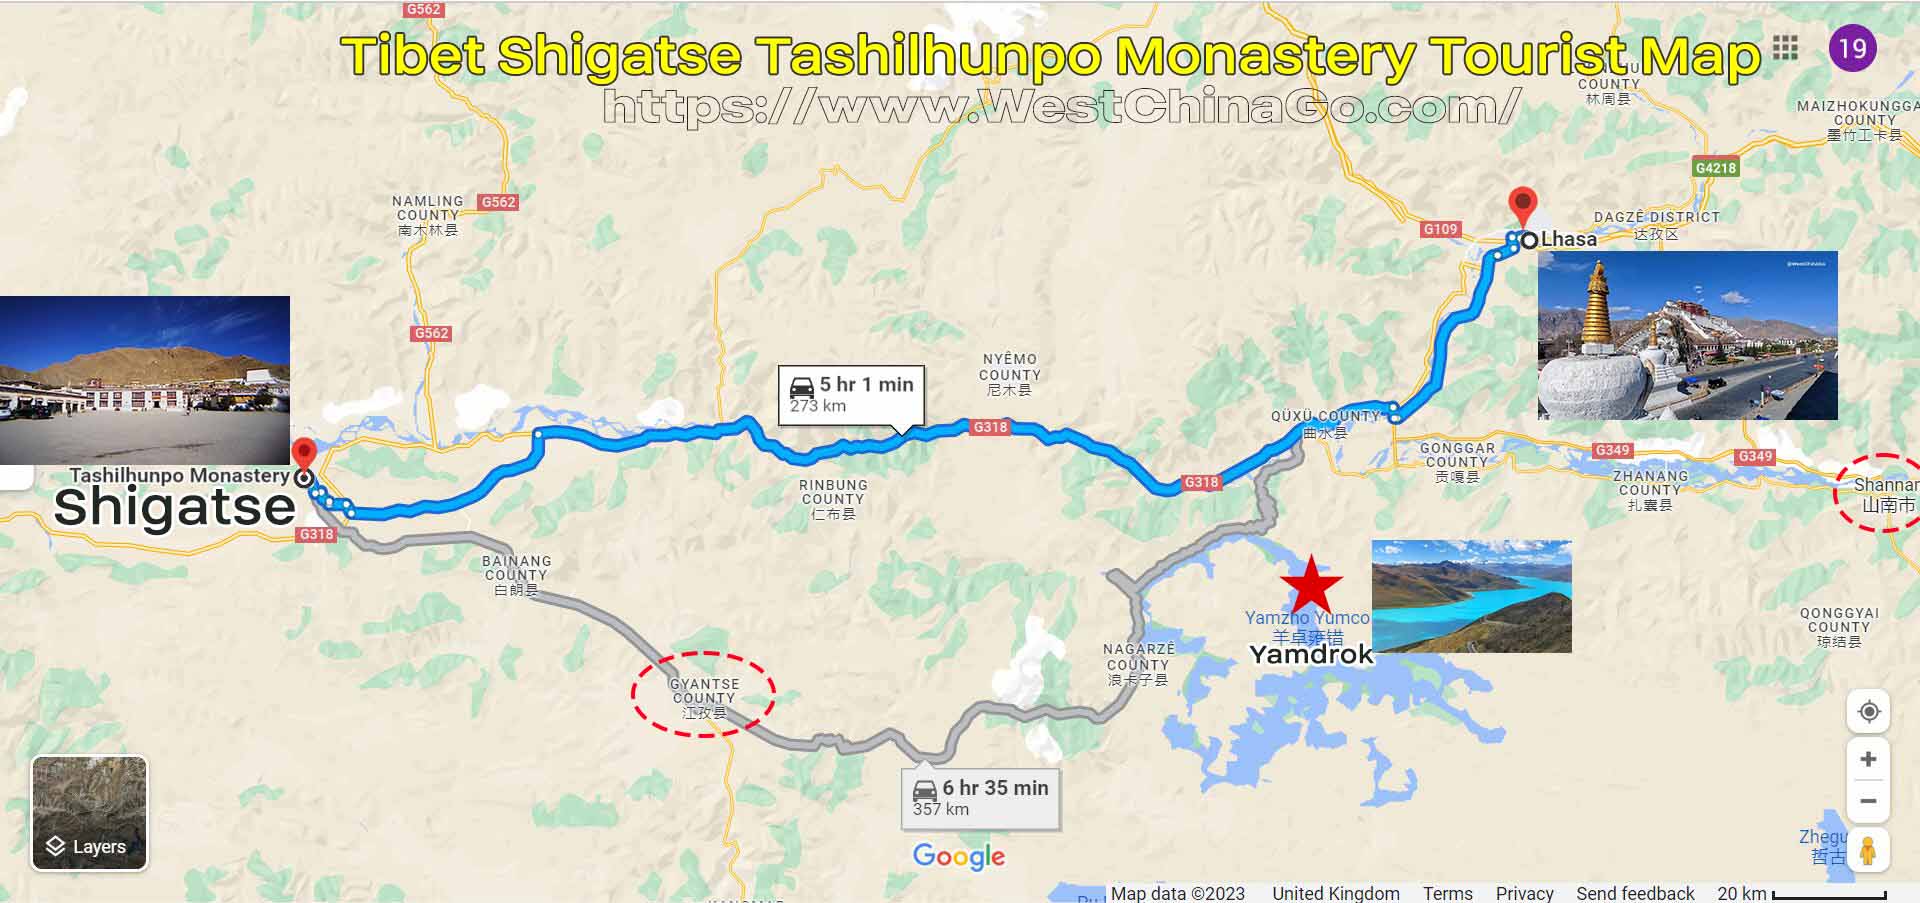 Tibet Shigatse Tashilhunpo Monastery Tourist Map